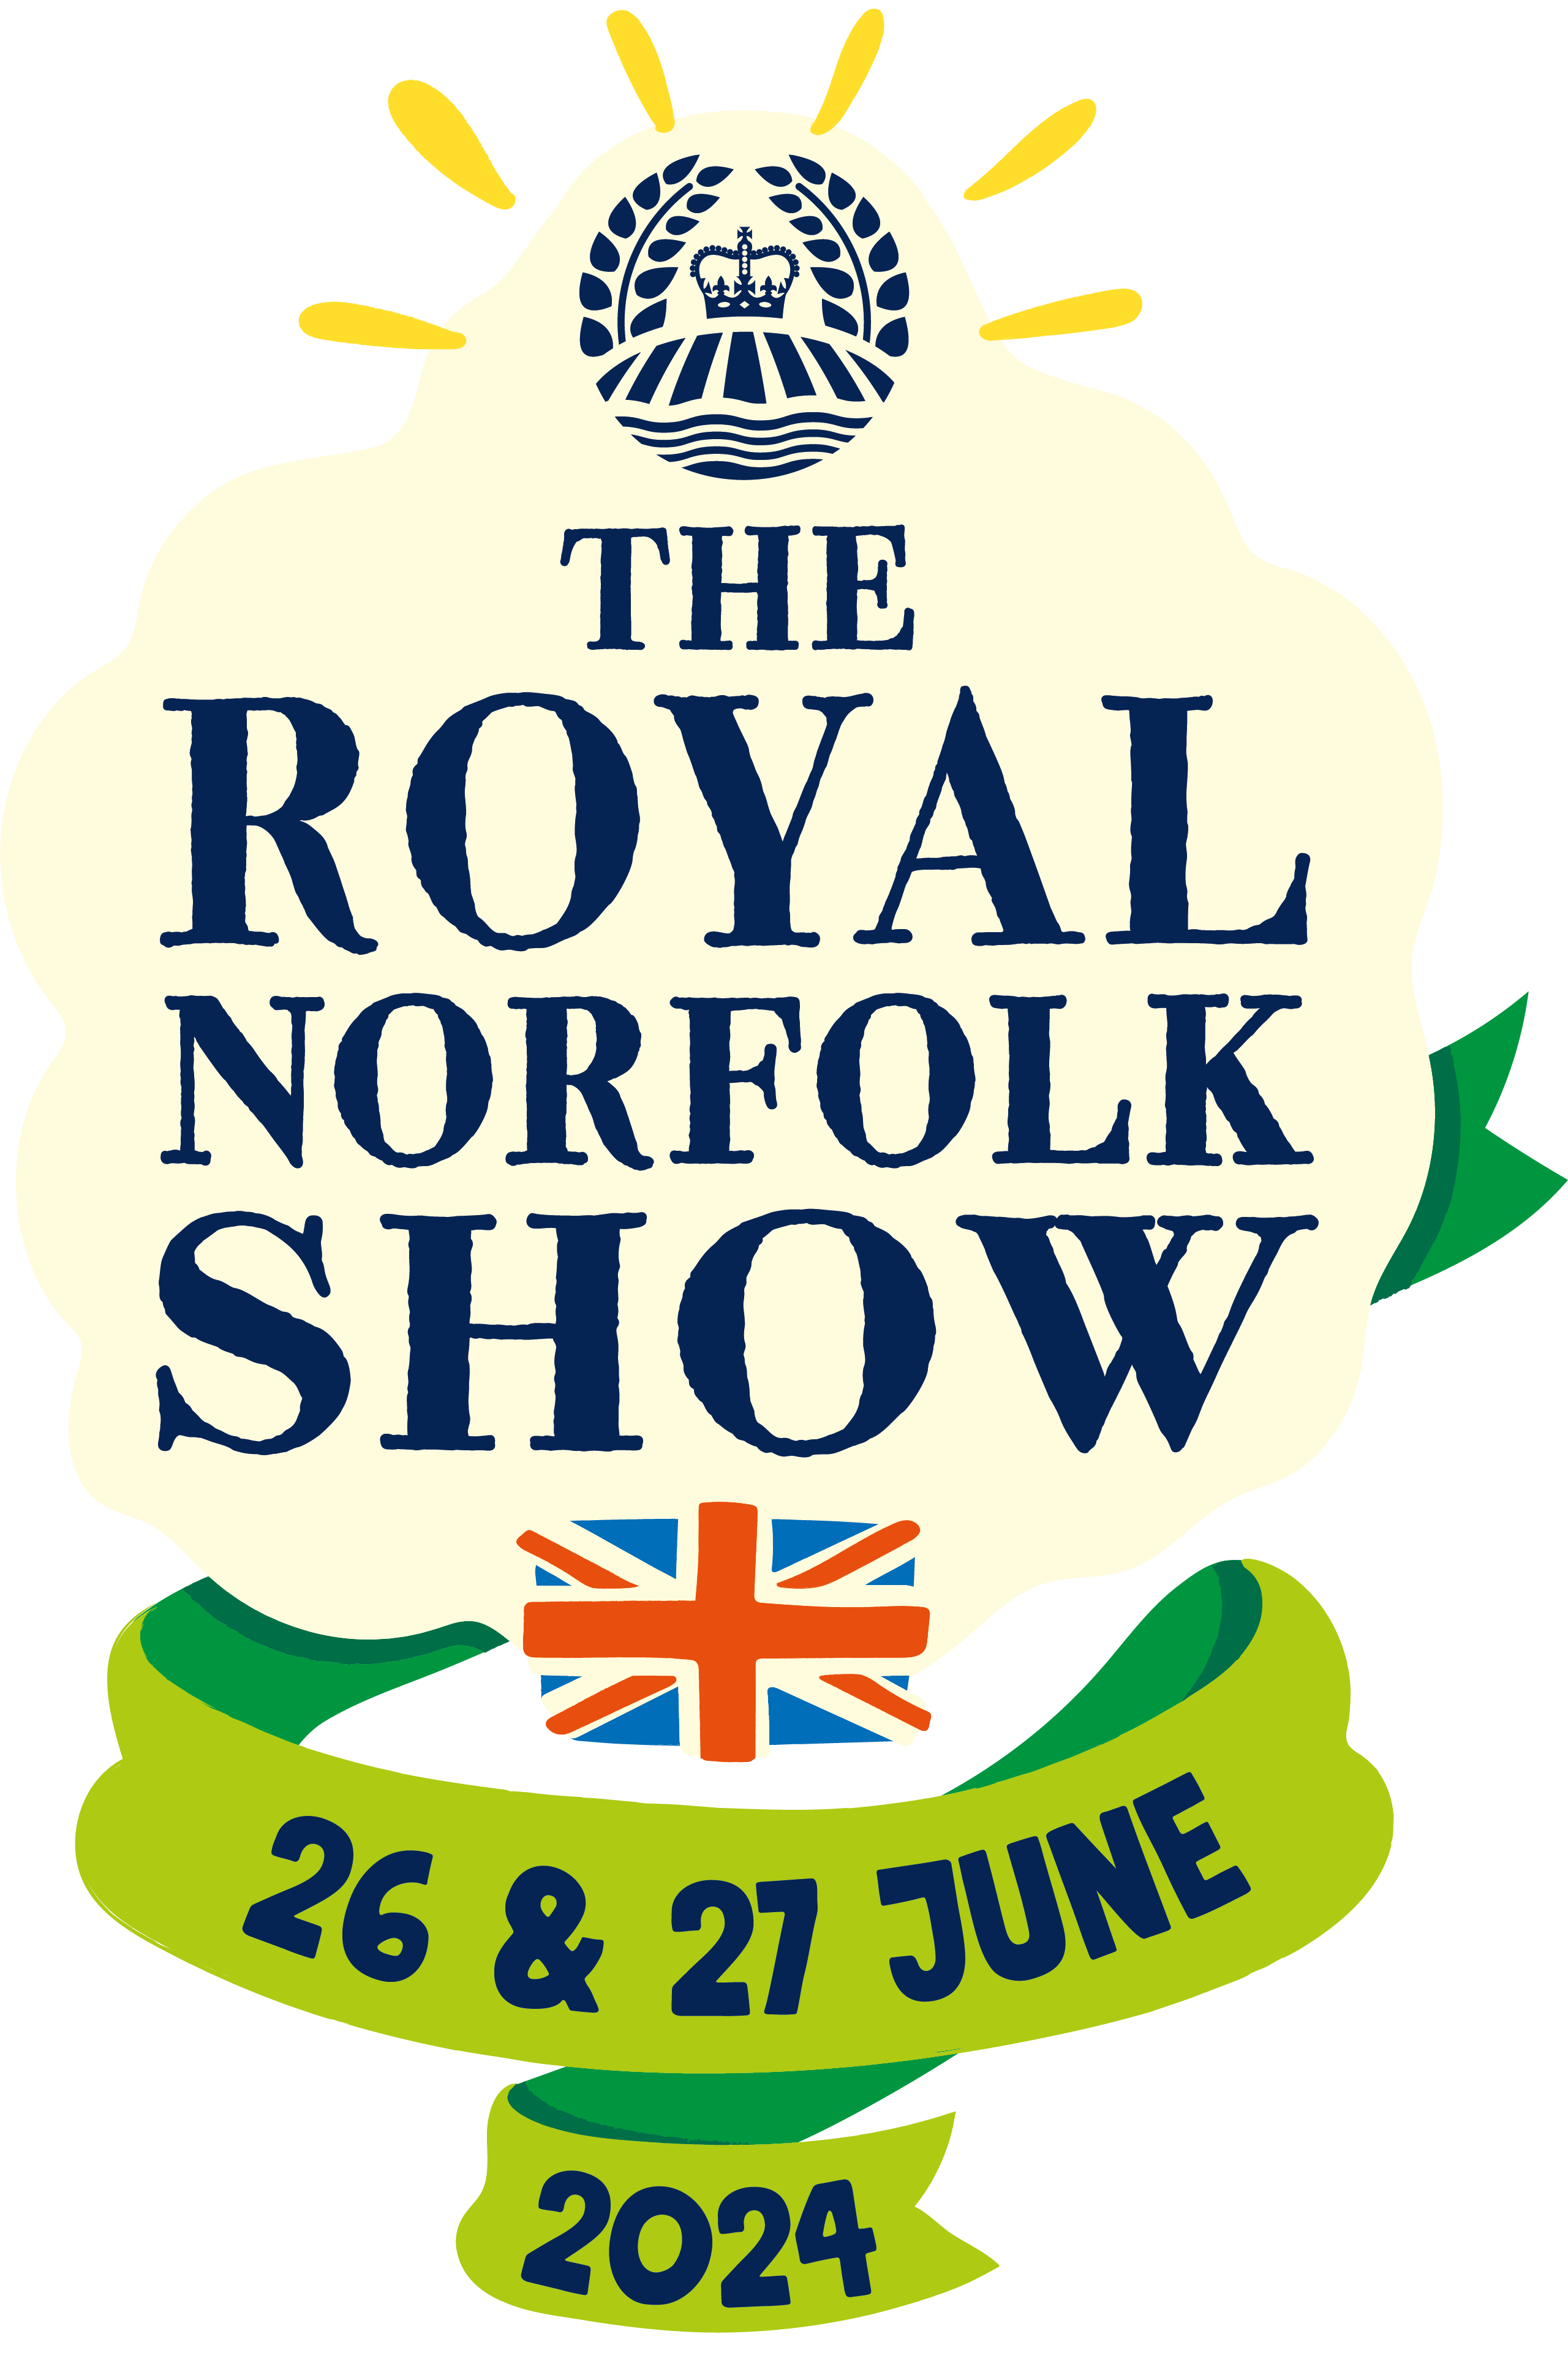 Royal Norfolk Show logo 2024